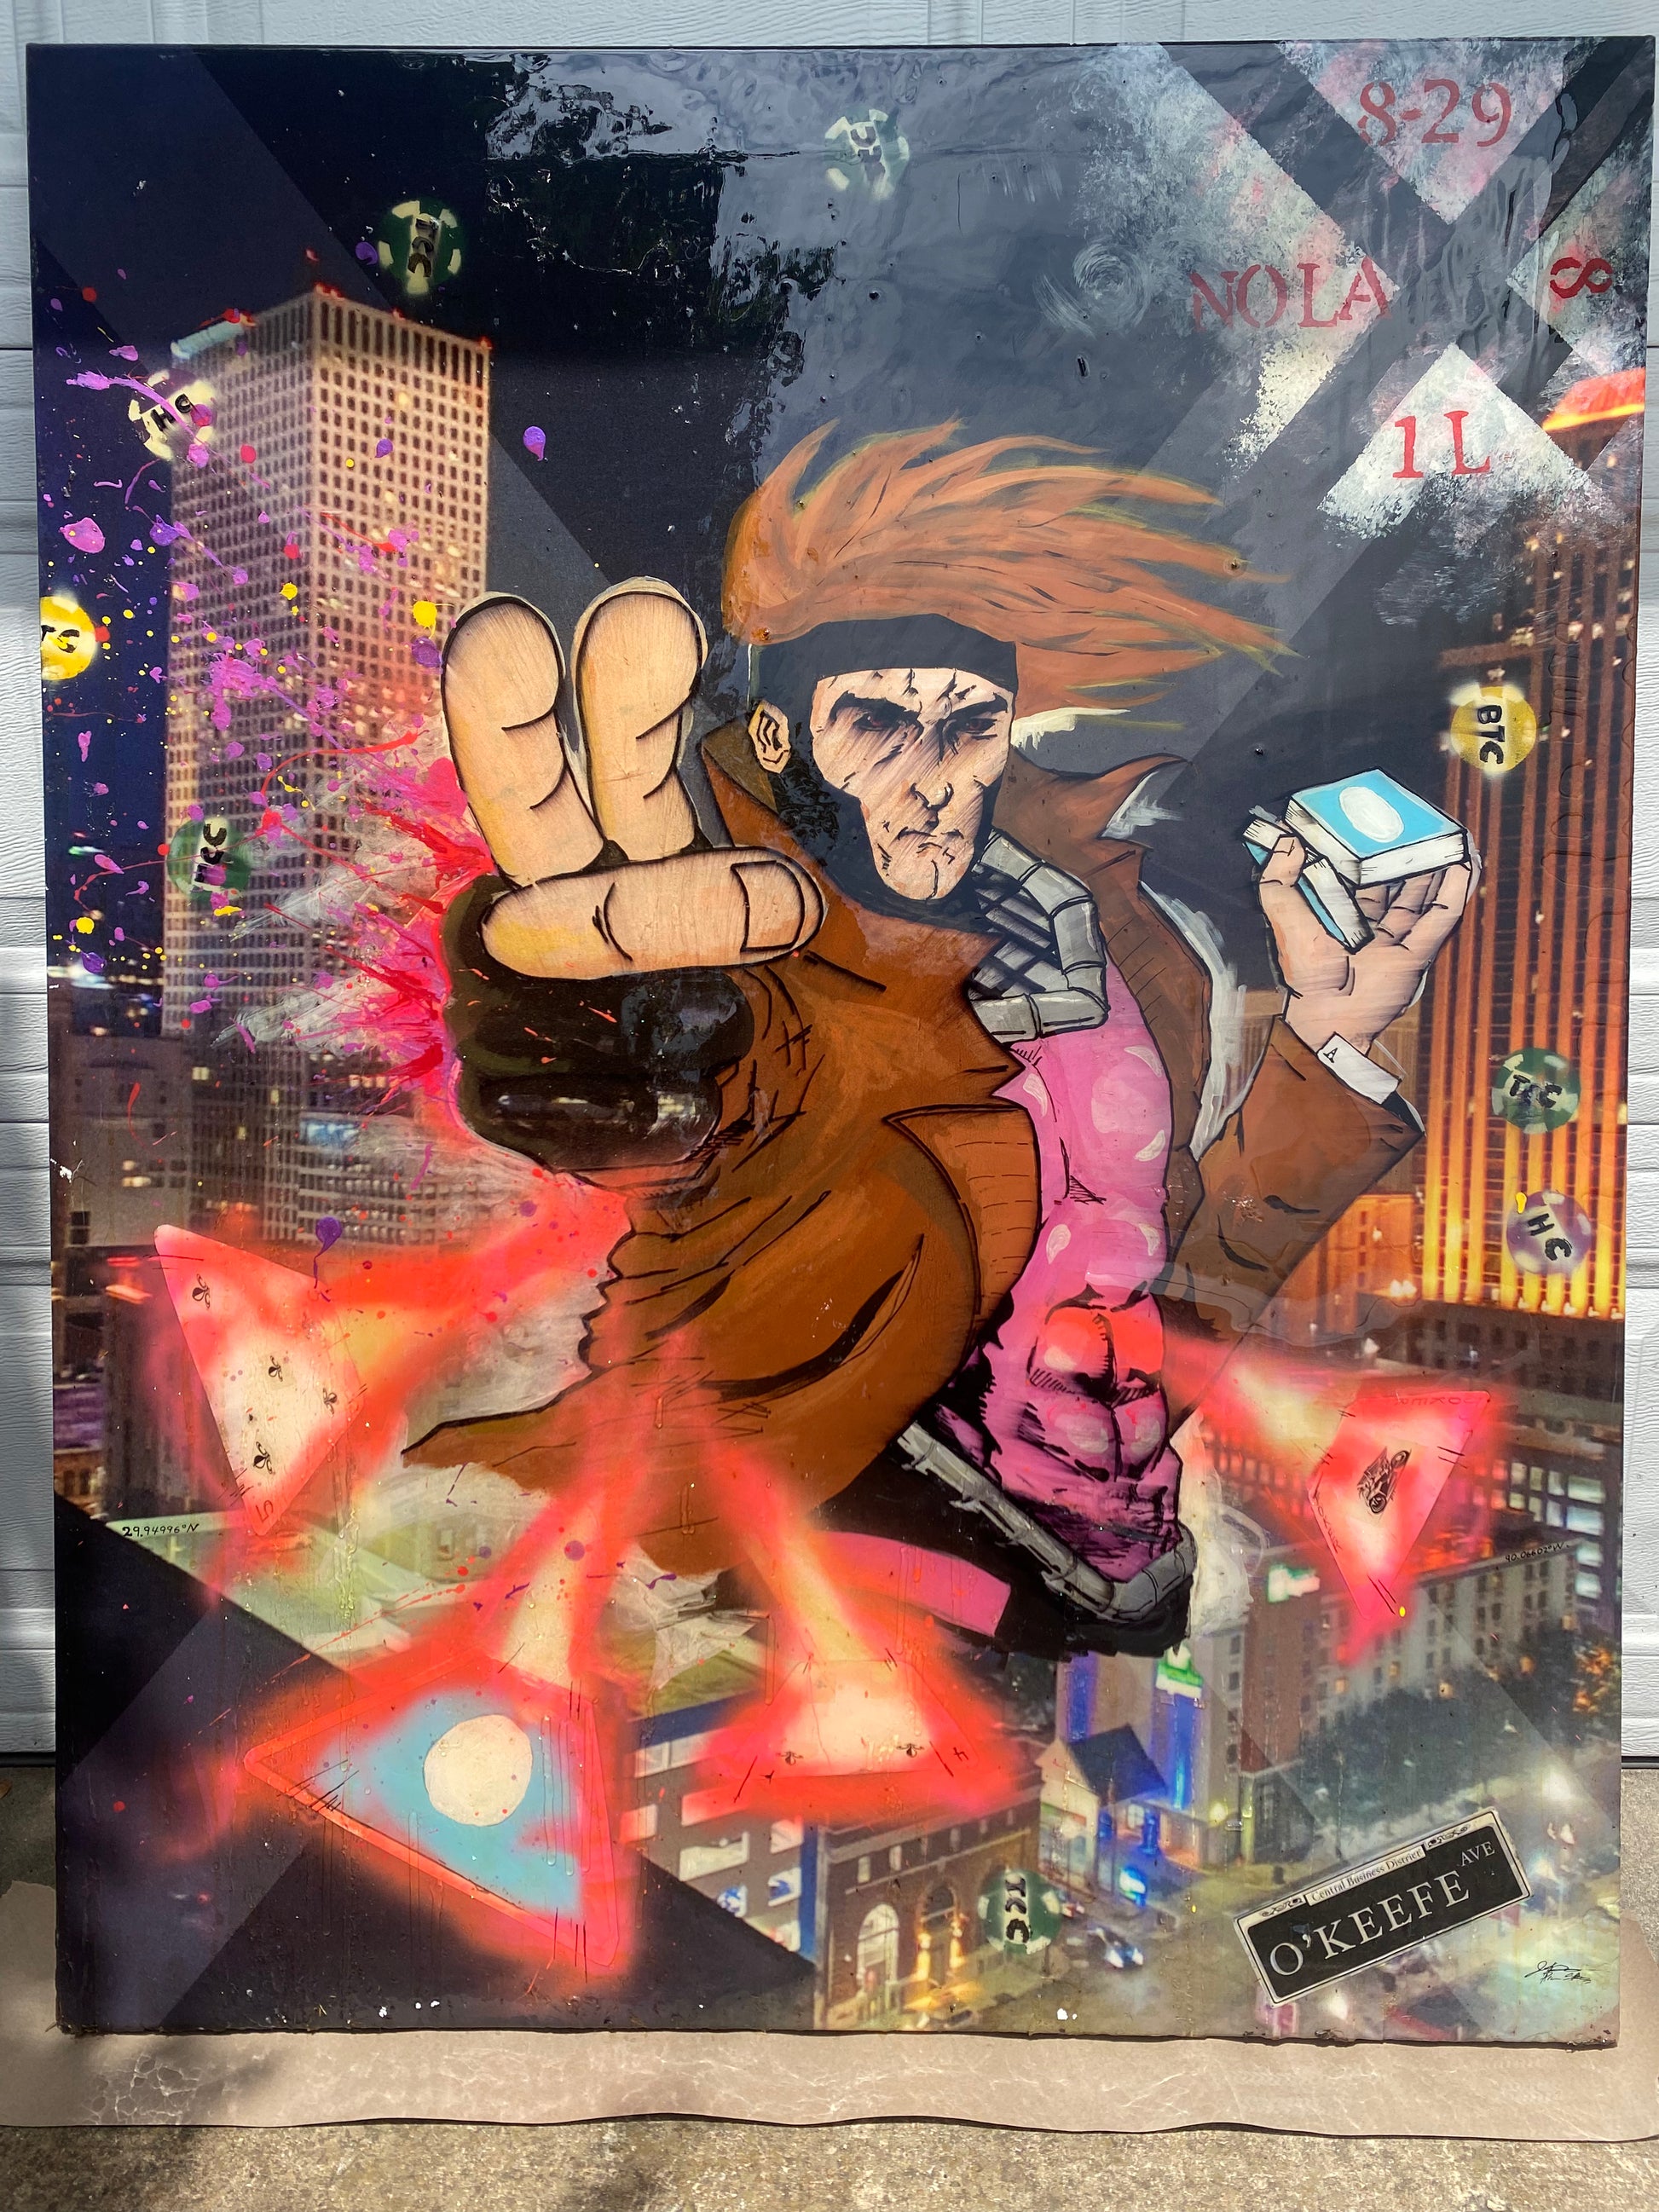 Gambit Digital Edition: Nov. 29, 2022 by Gambit New Orleans - Issuu